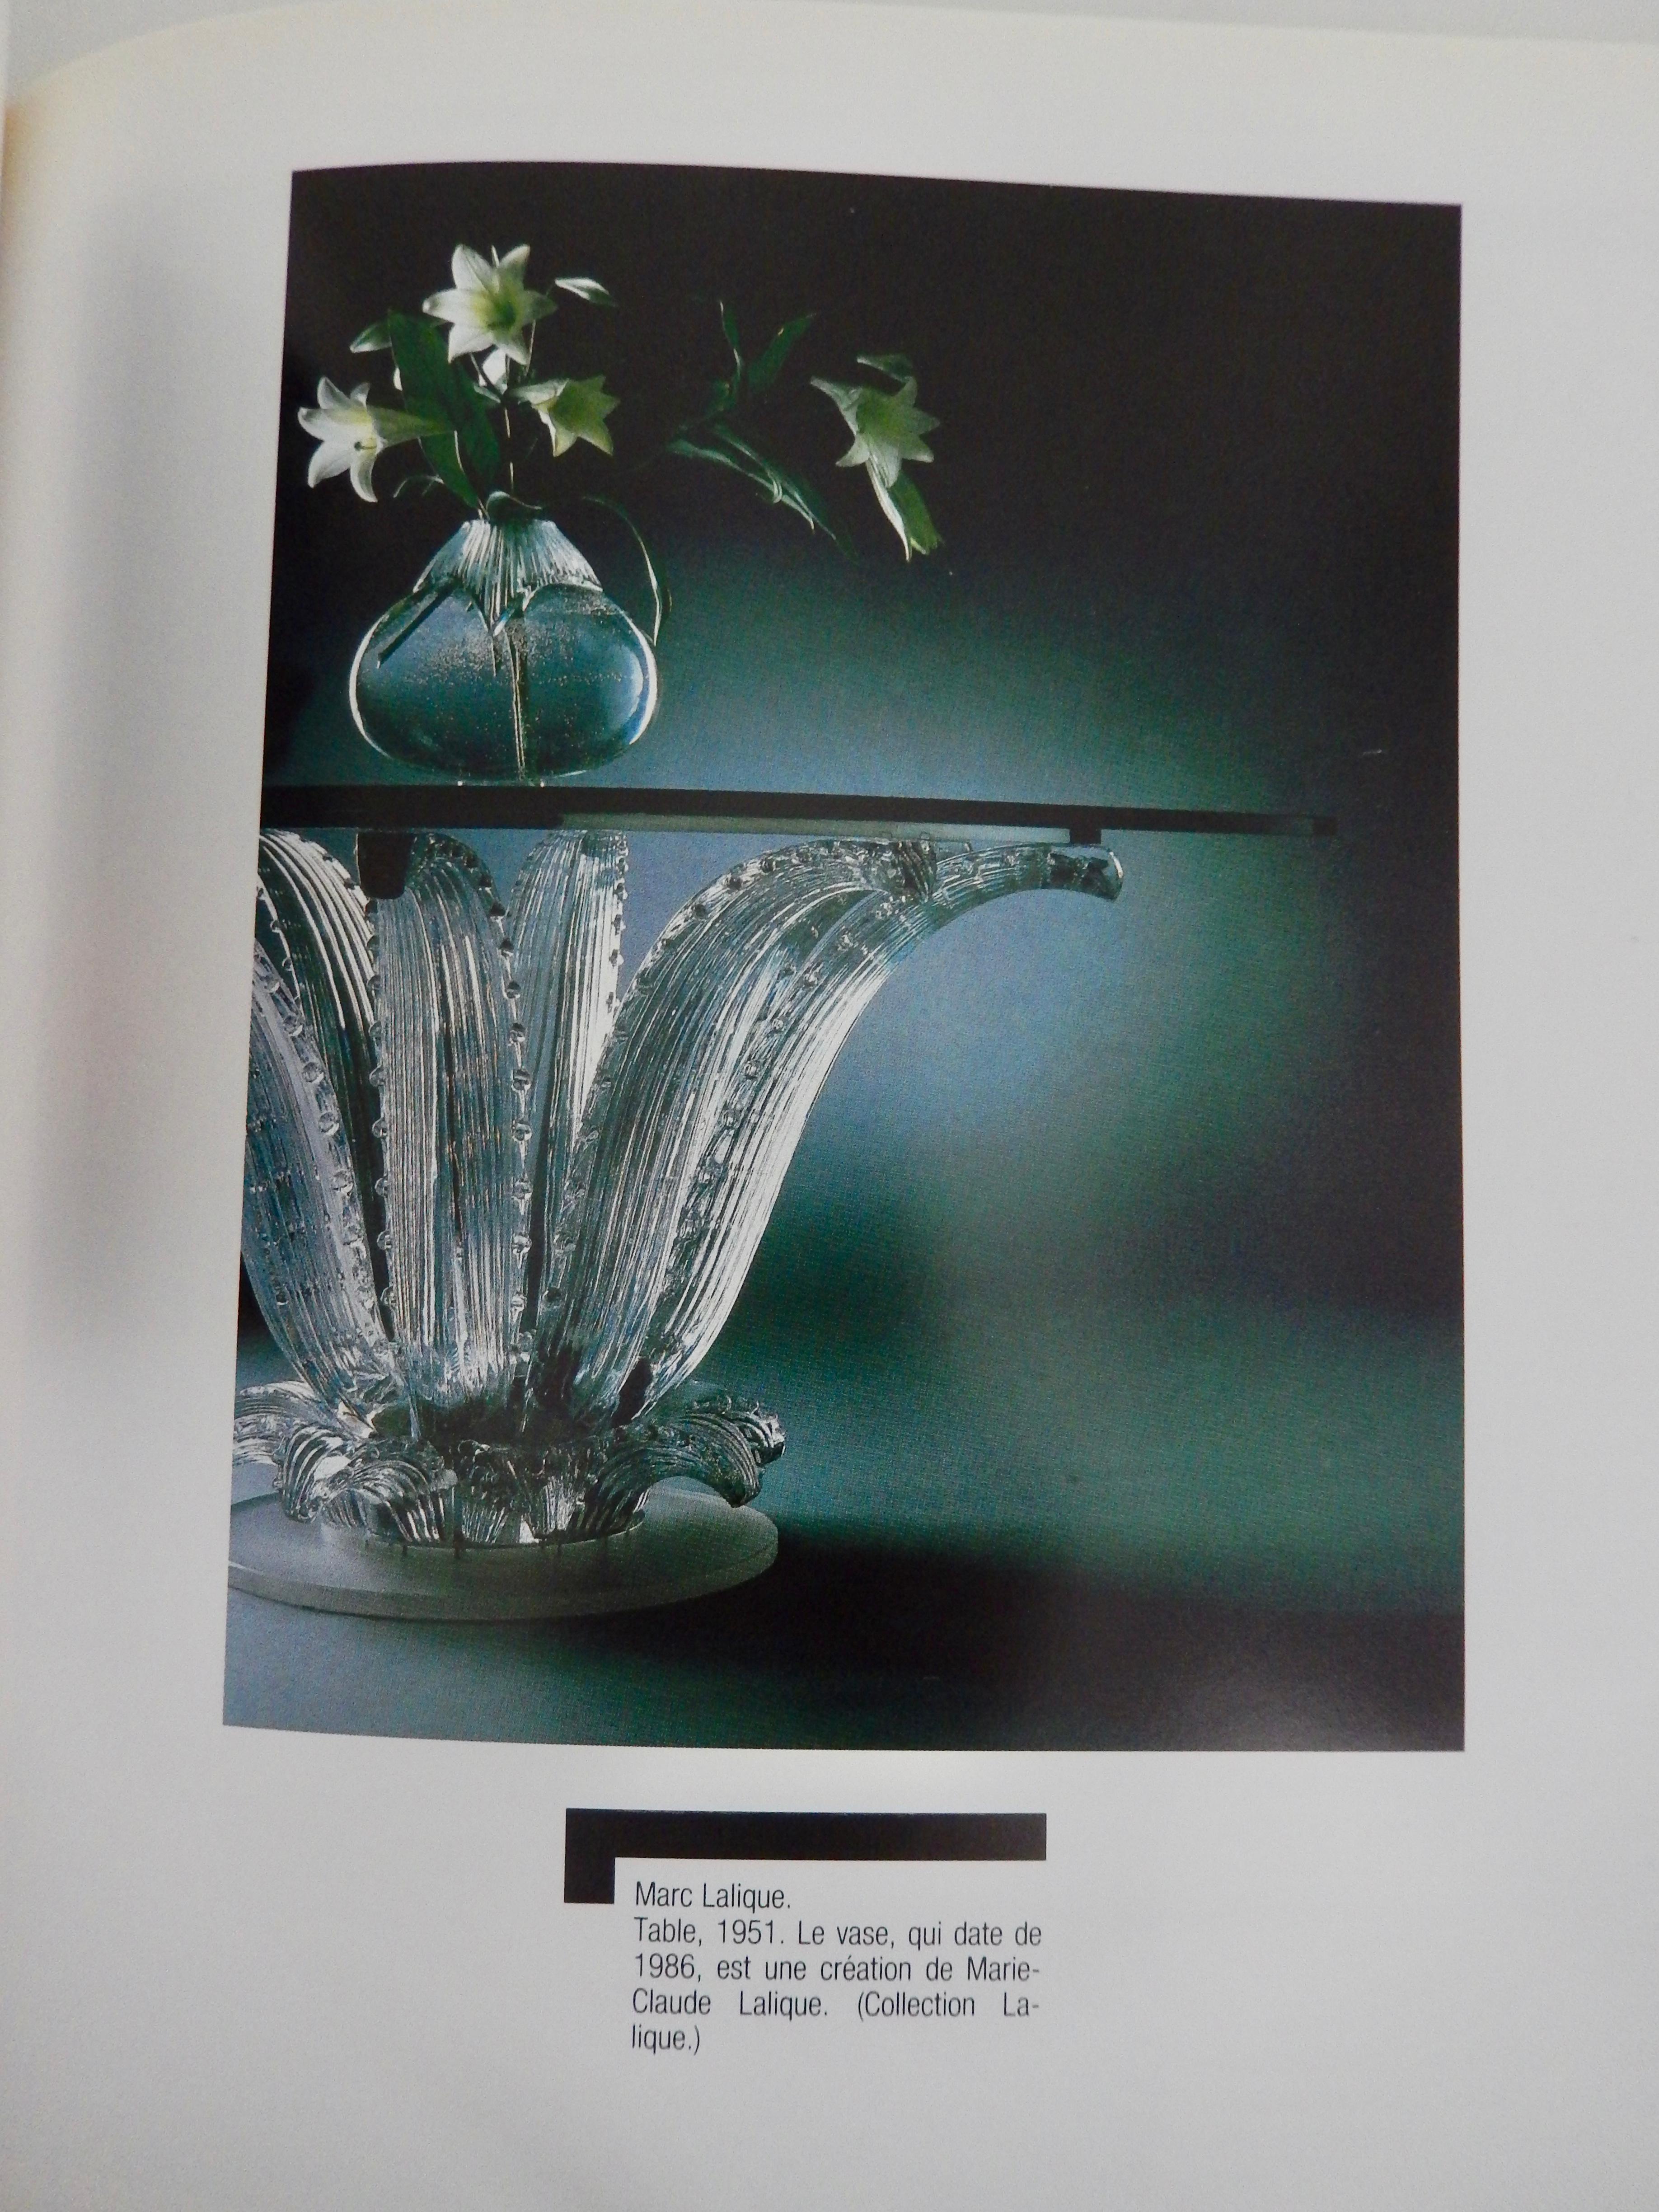 Patrick Favardin's Le Style 50, Midcentury French Decorative Arts Catalog 1